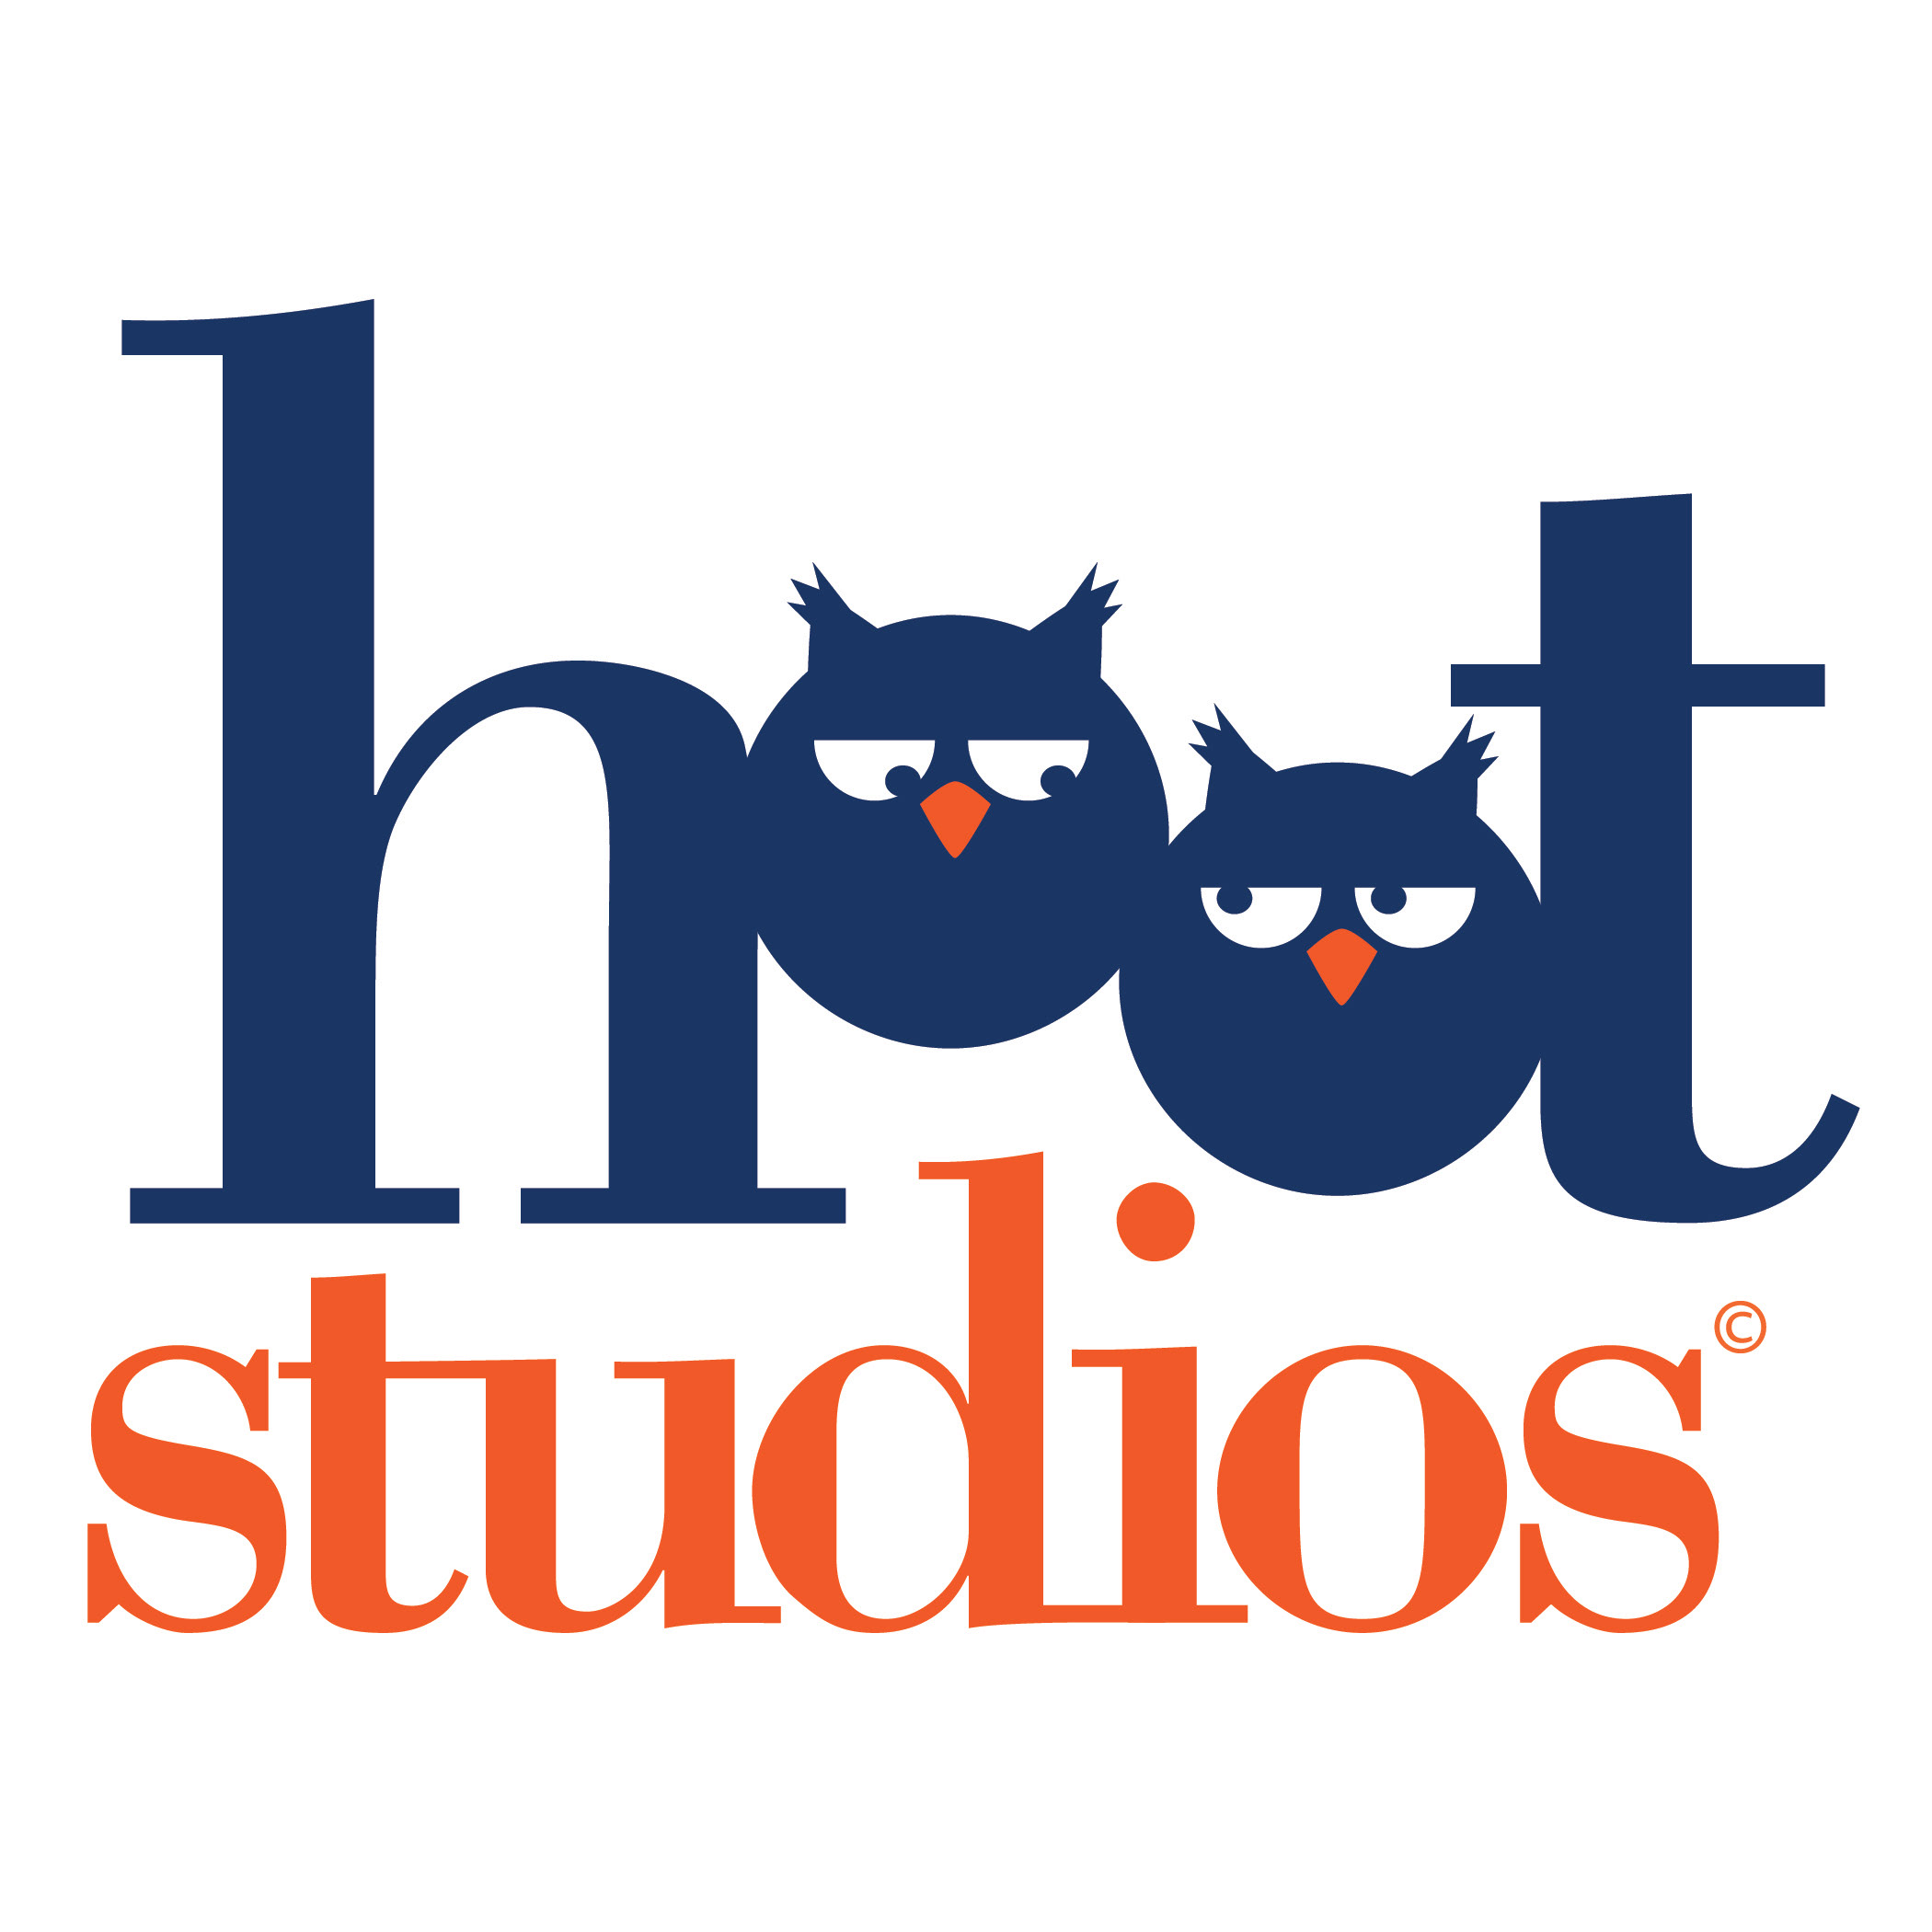 Hoot Studios